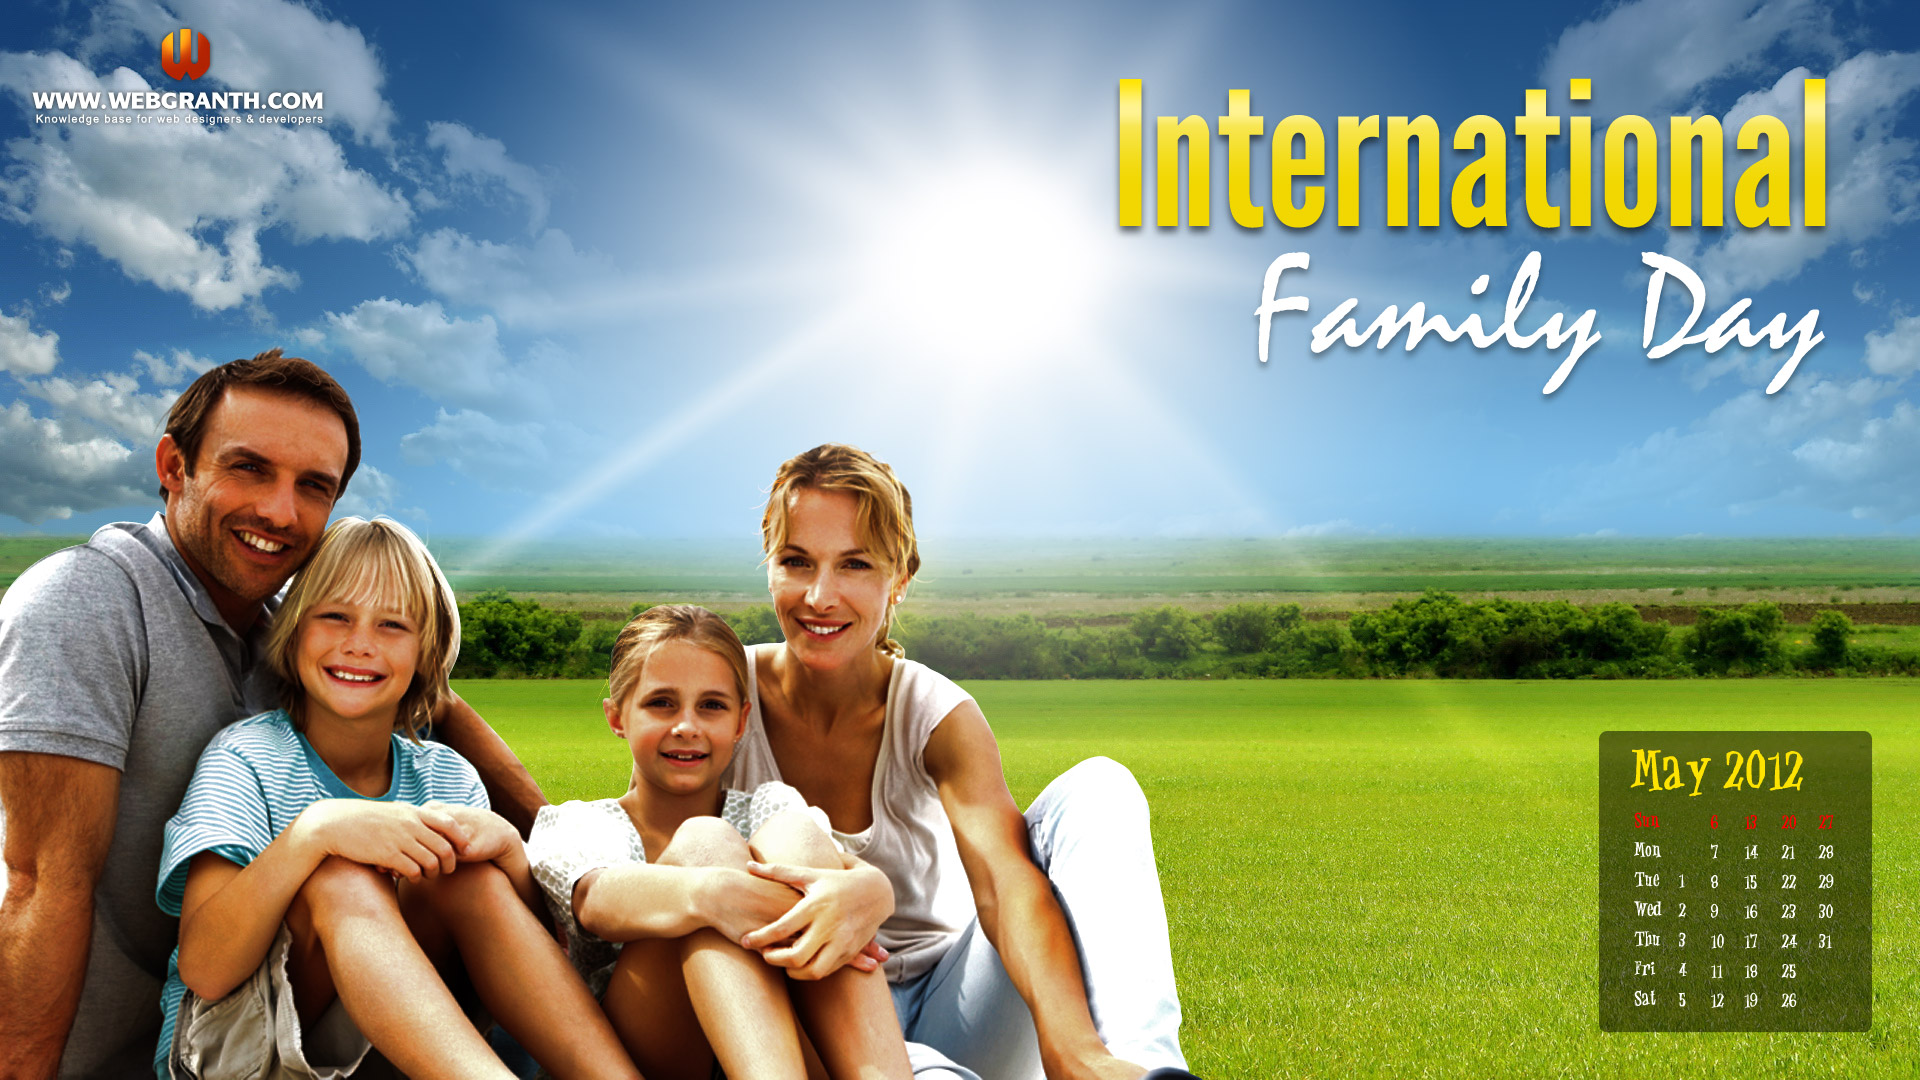 Desktop International Family Day Wallpaper Webgranth